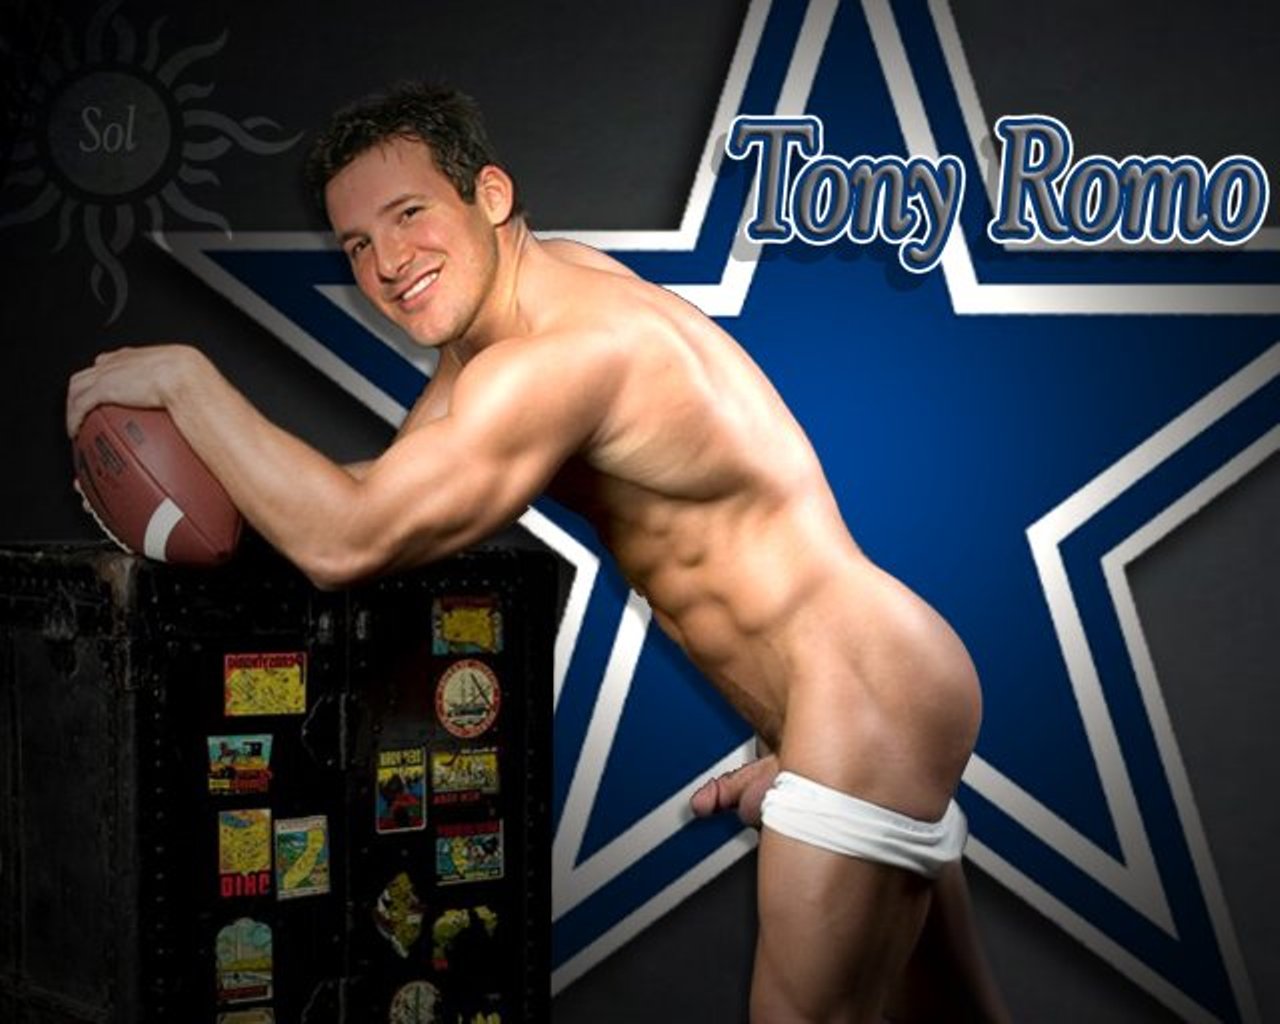 Tony romo shirtless